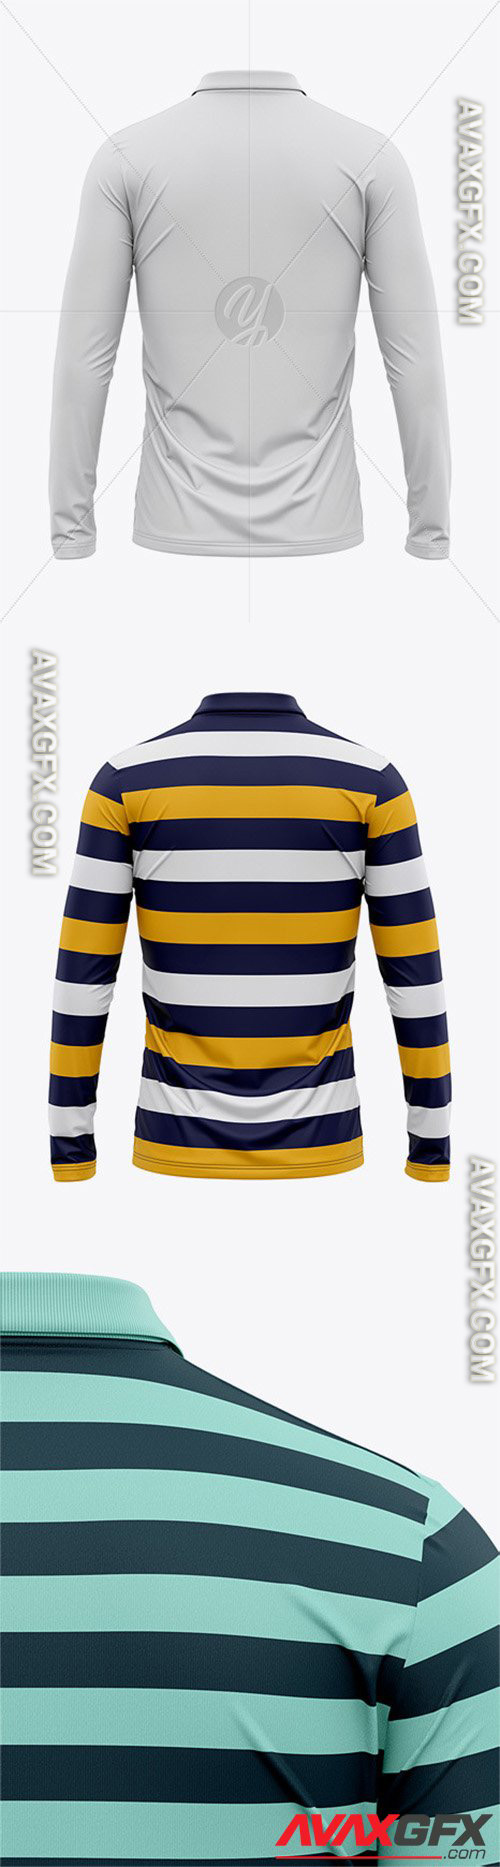 Men's Long Sleeve Polo Shirt - Back View 54925